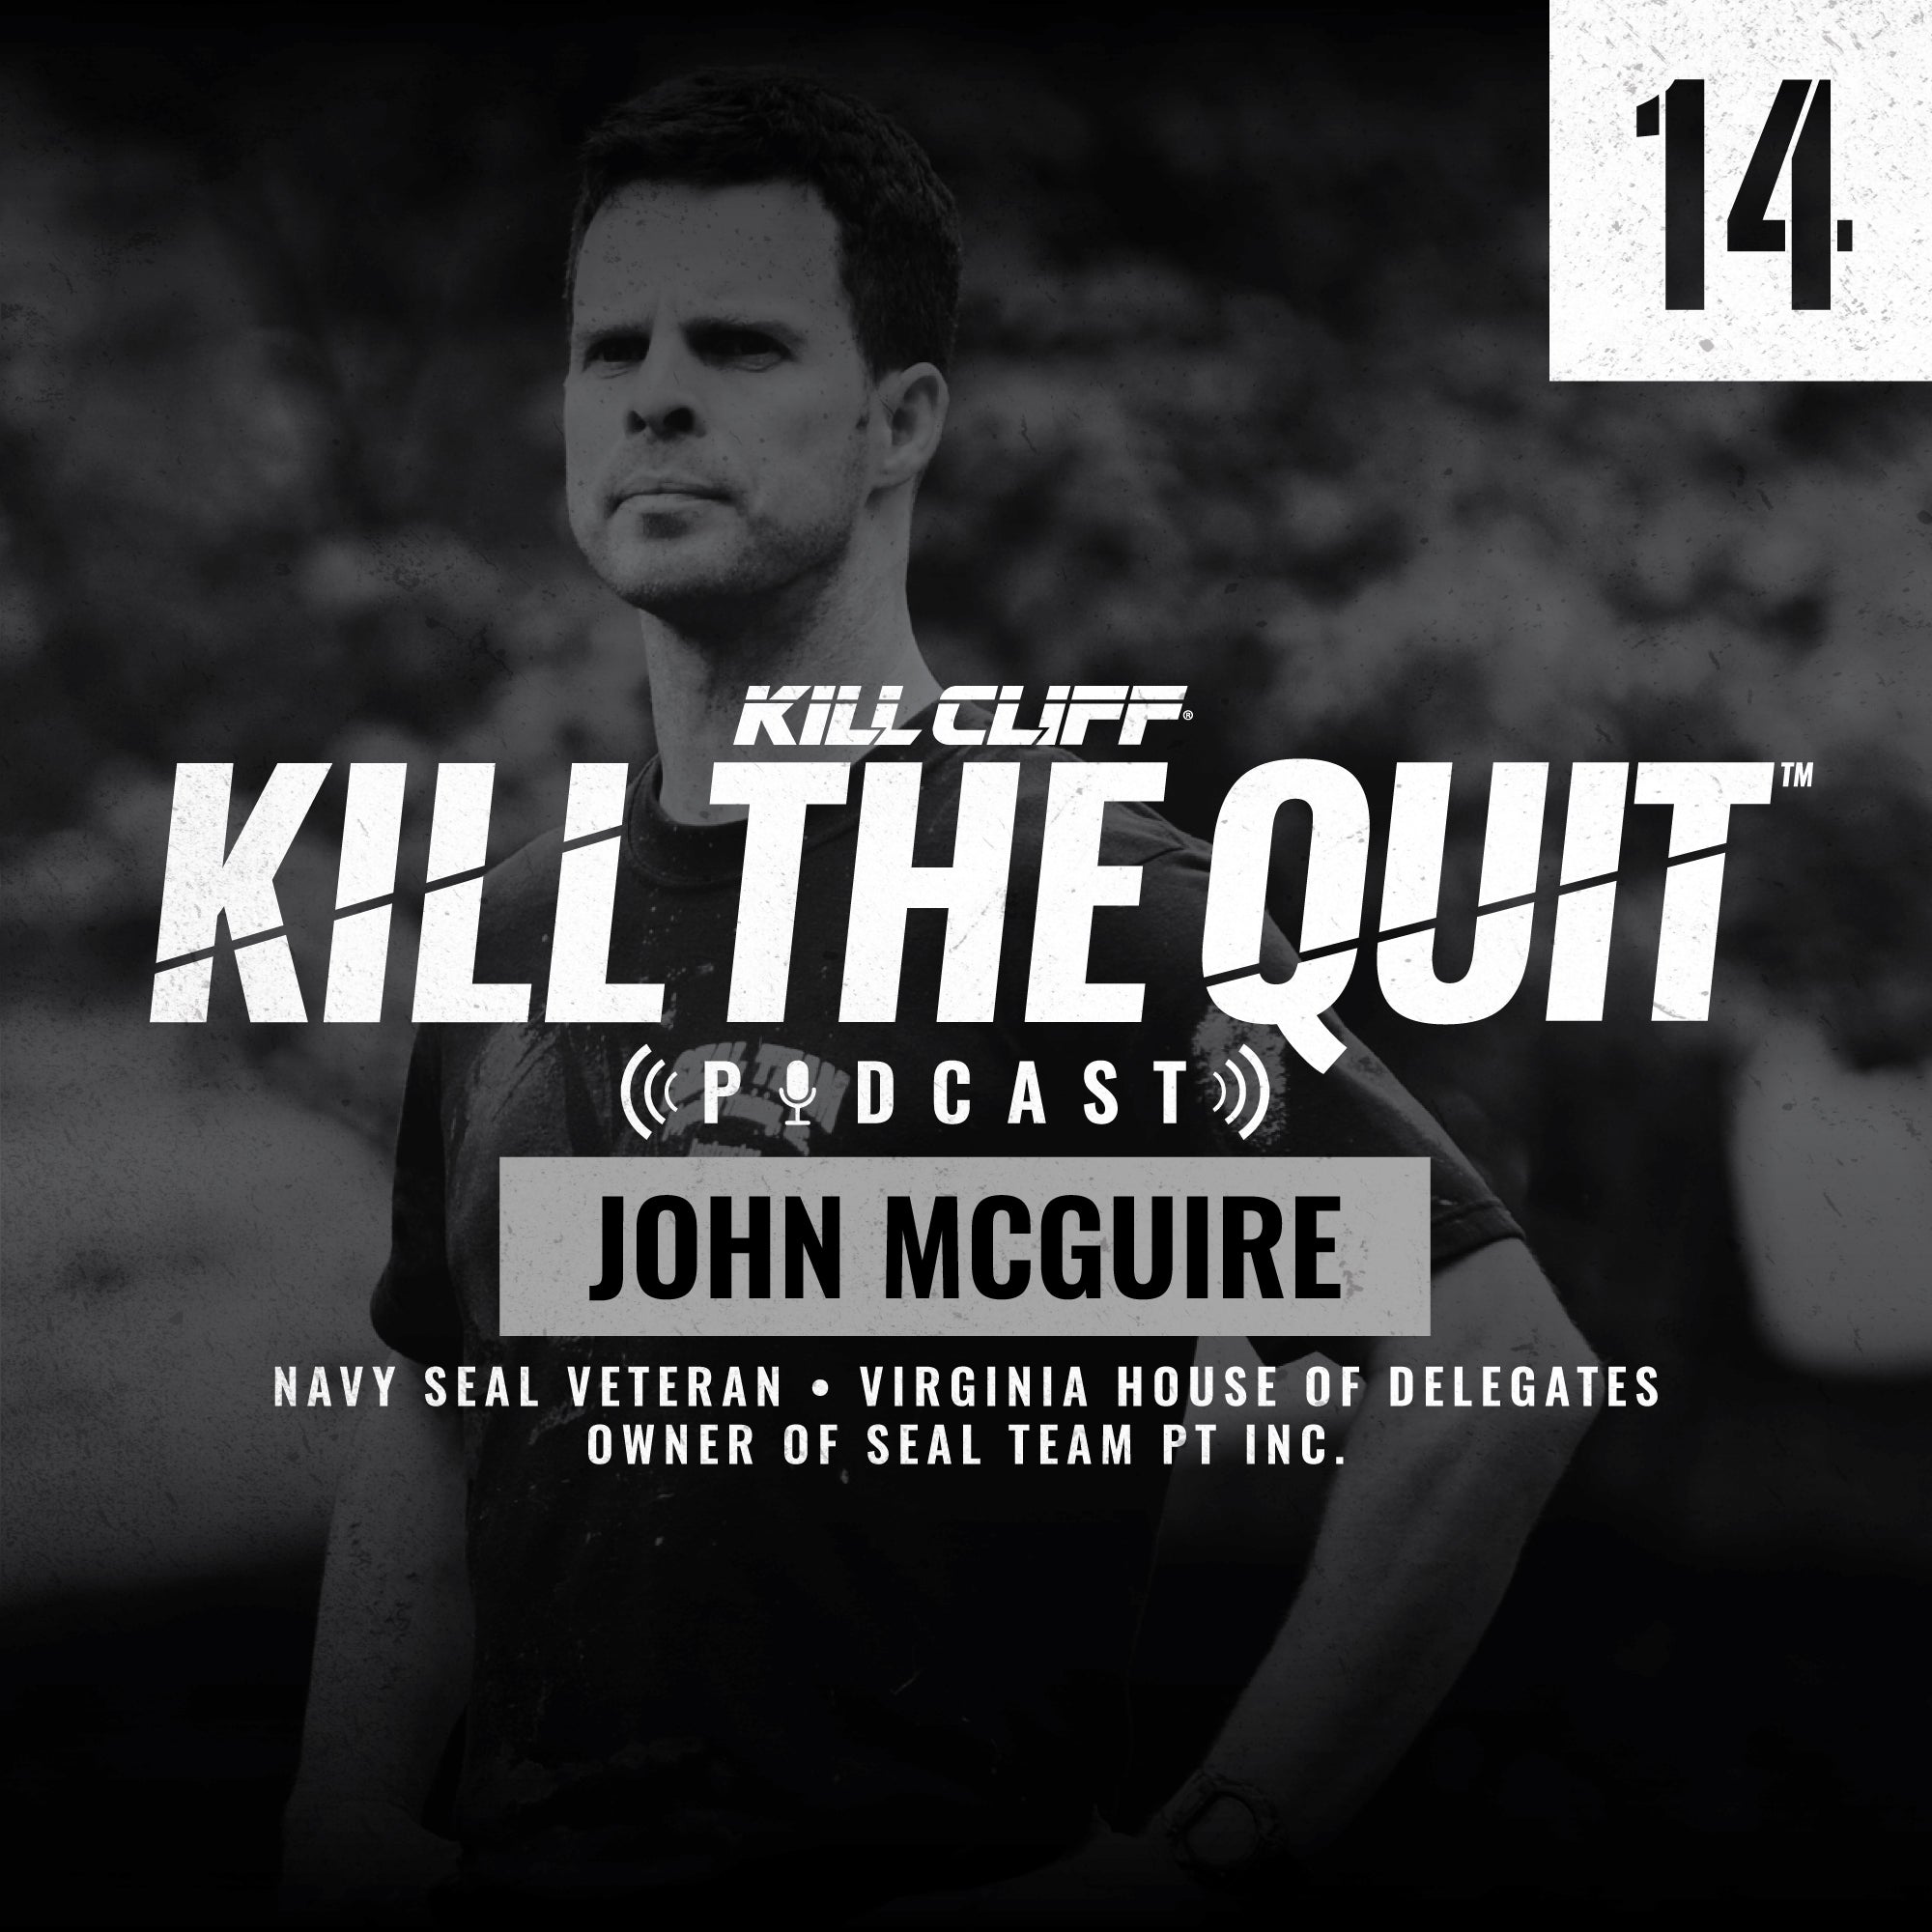 PODCAST Ep. 014 - John McGuire - Kill Cliff